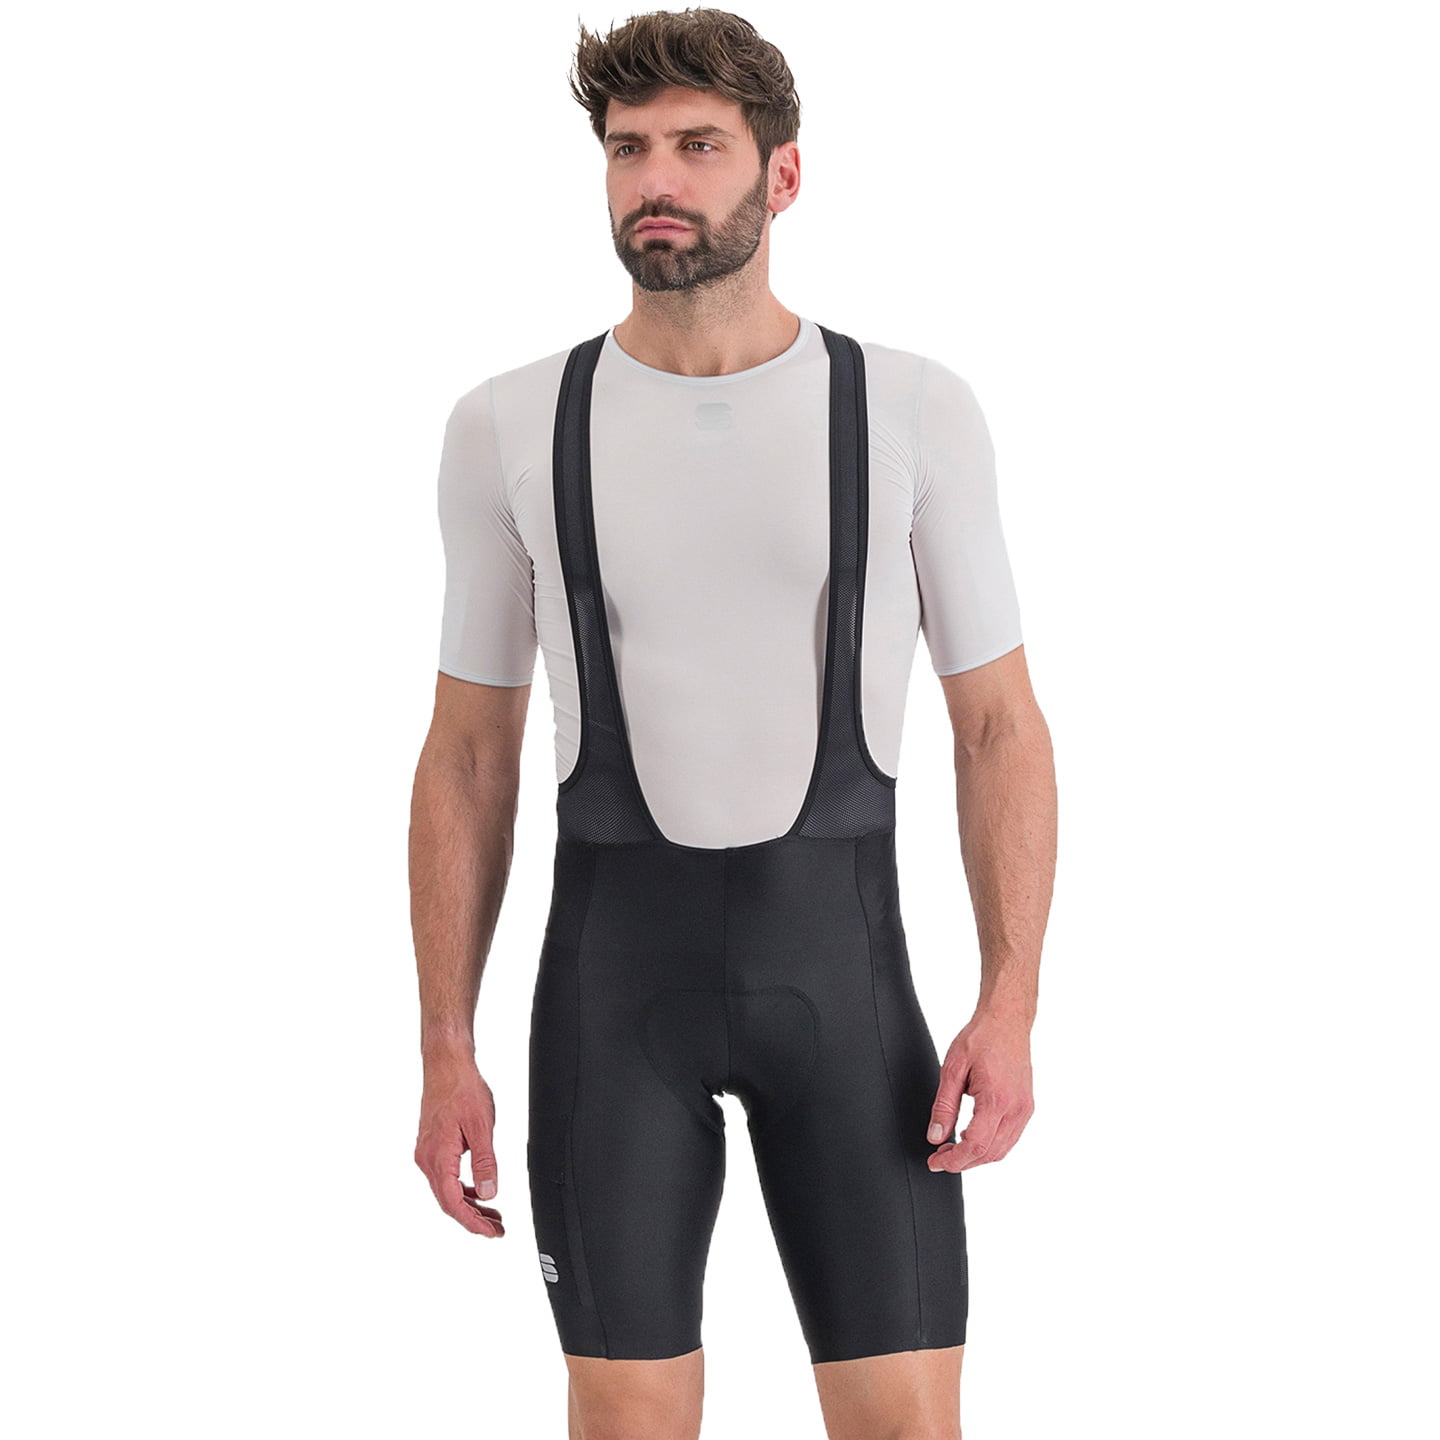 SPORTFUL Giara Bib Shorts Bib Shorts, for men, size XL, Cycle shorts, Cycling clothing